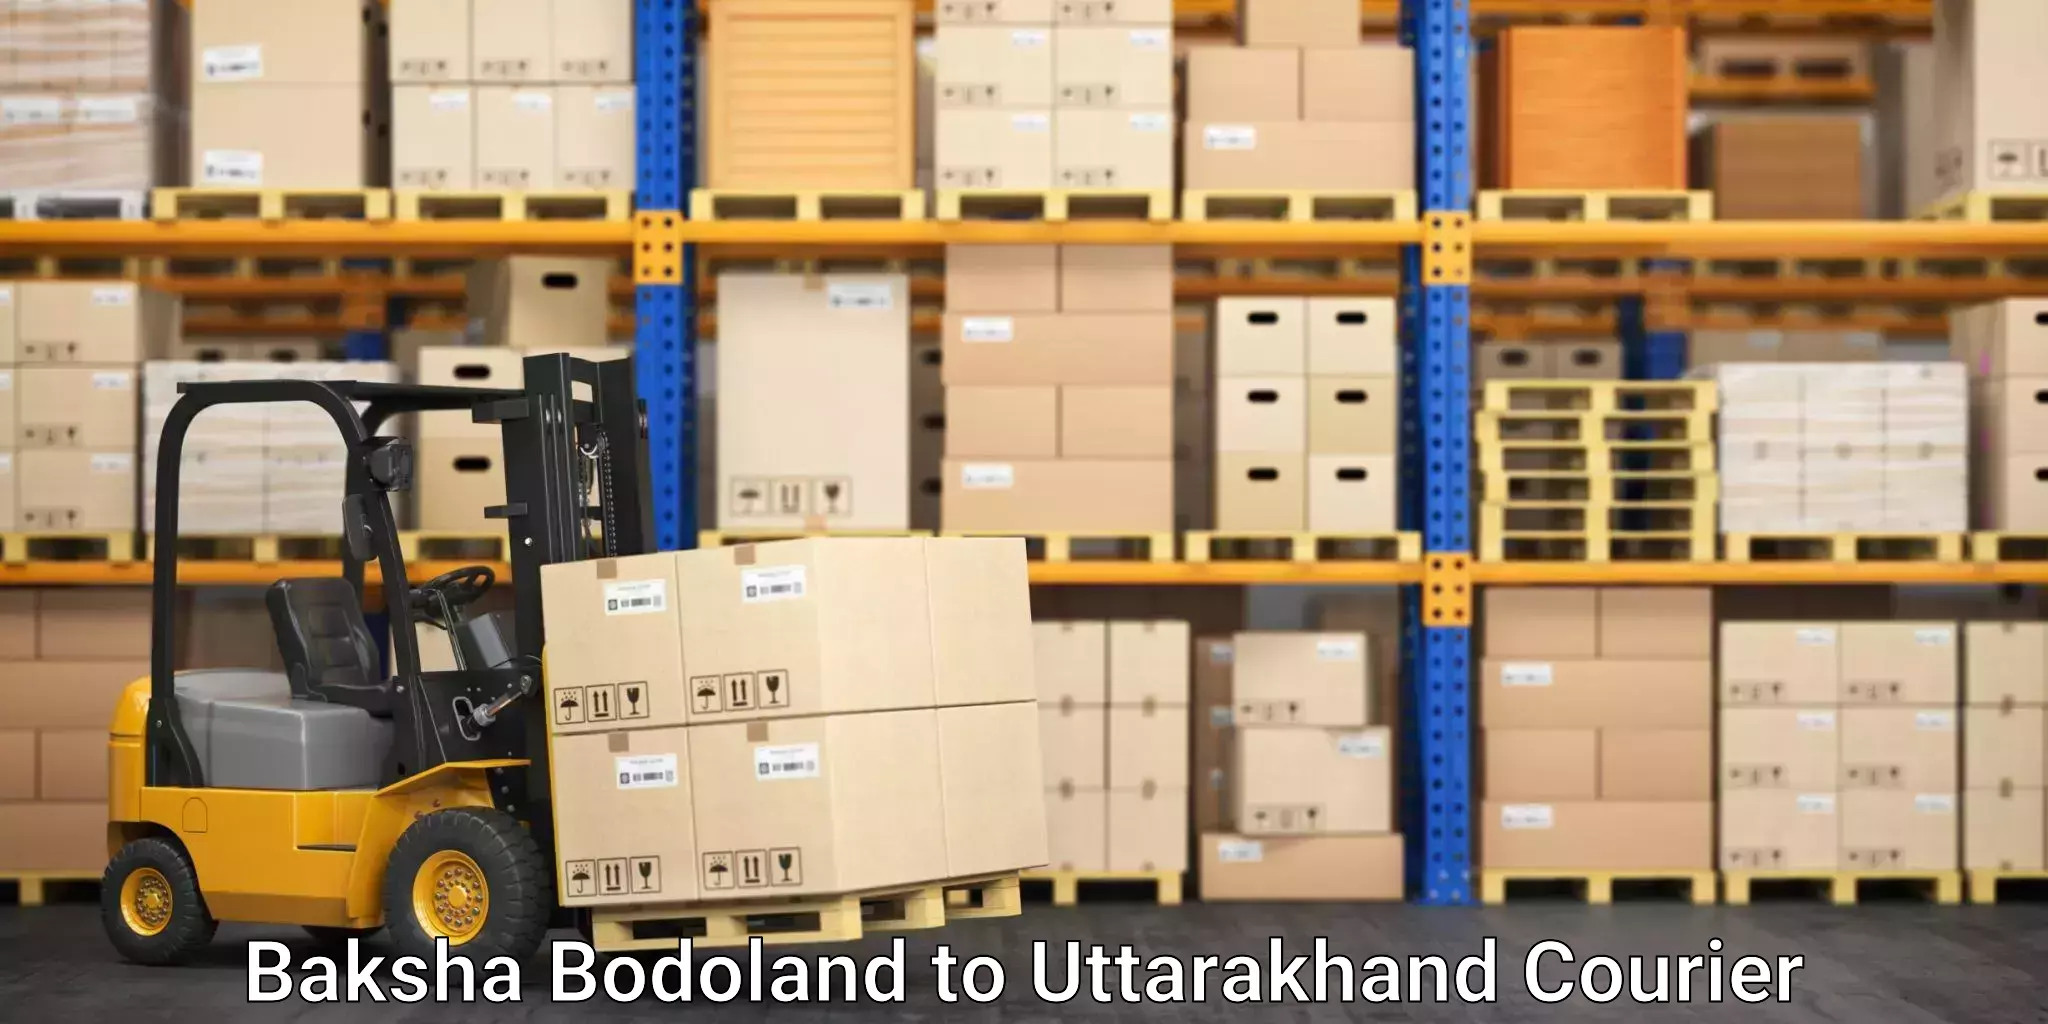 On-demand shipping options Baksha Bodoland to IIT Roorkee